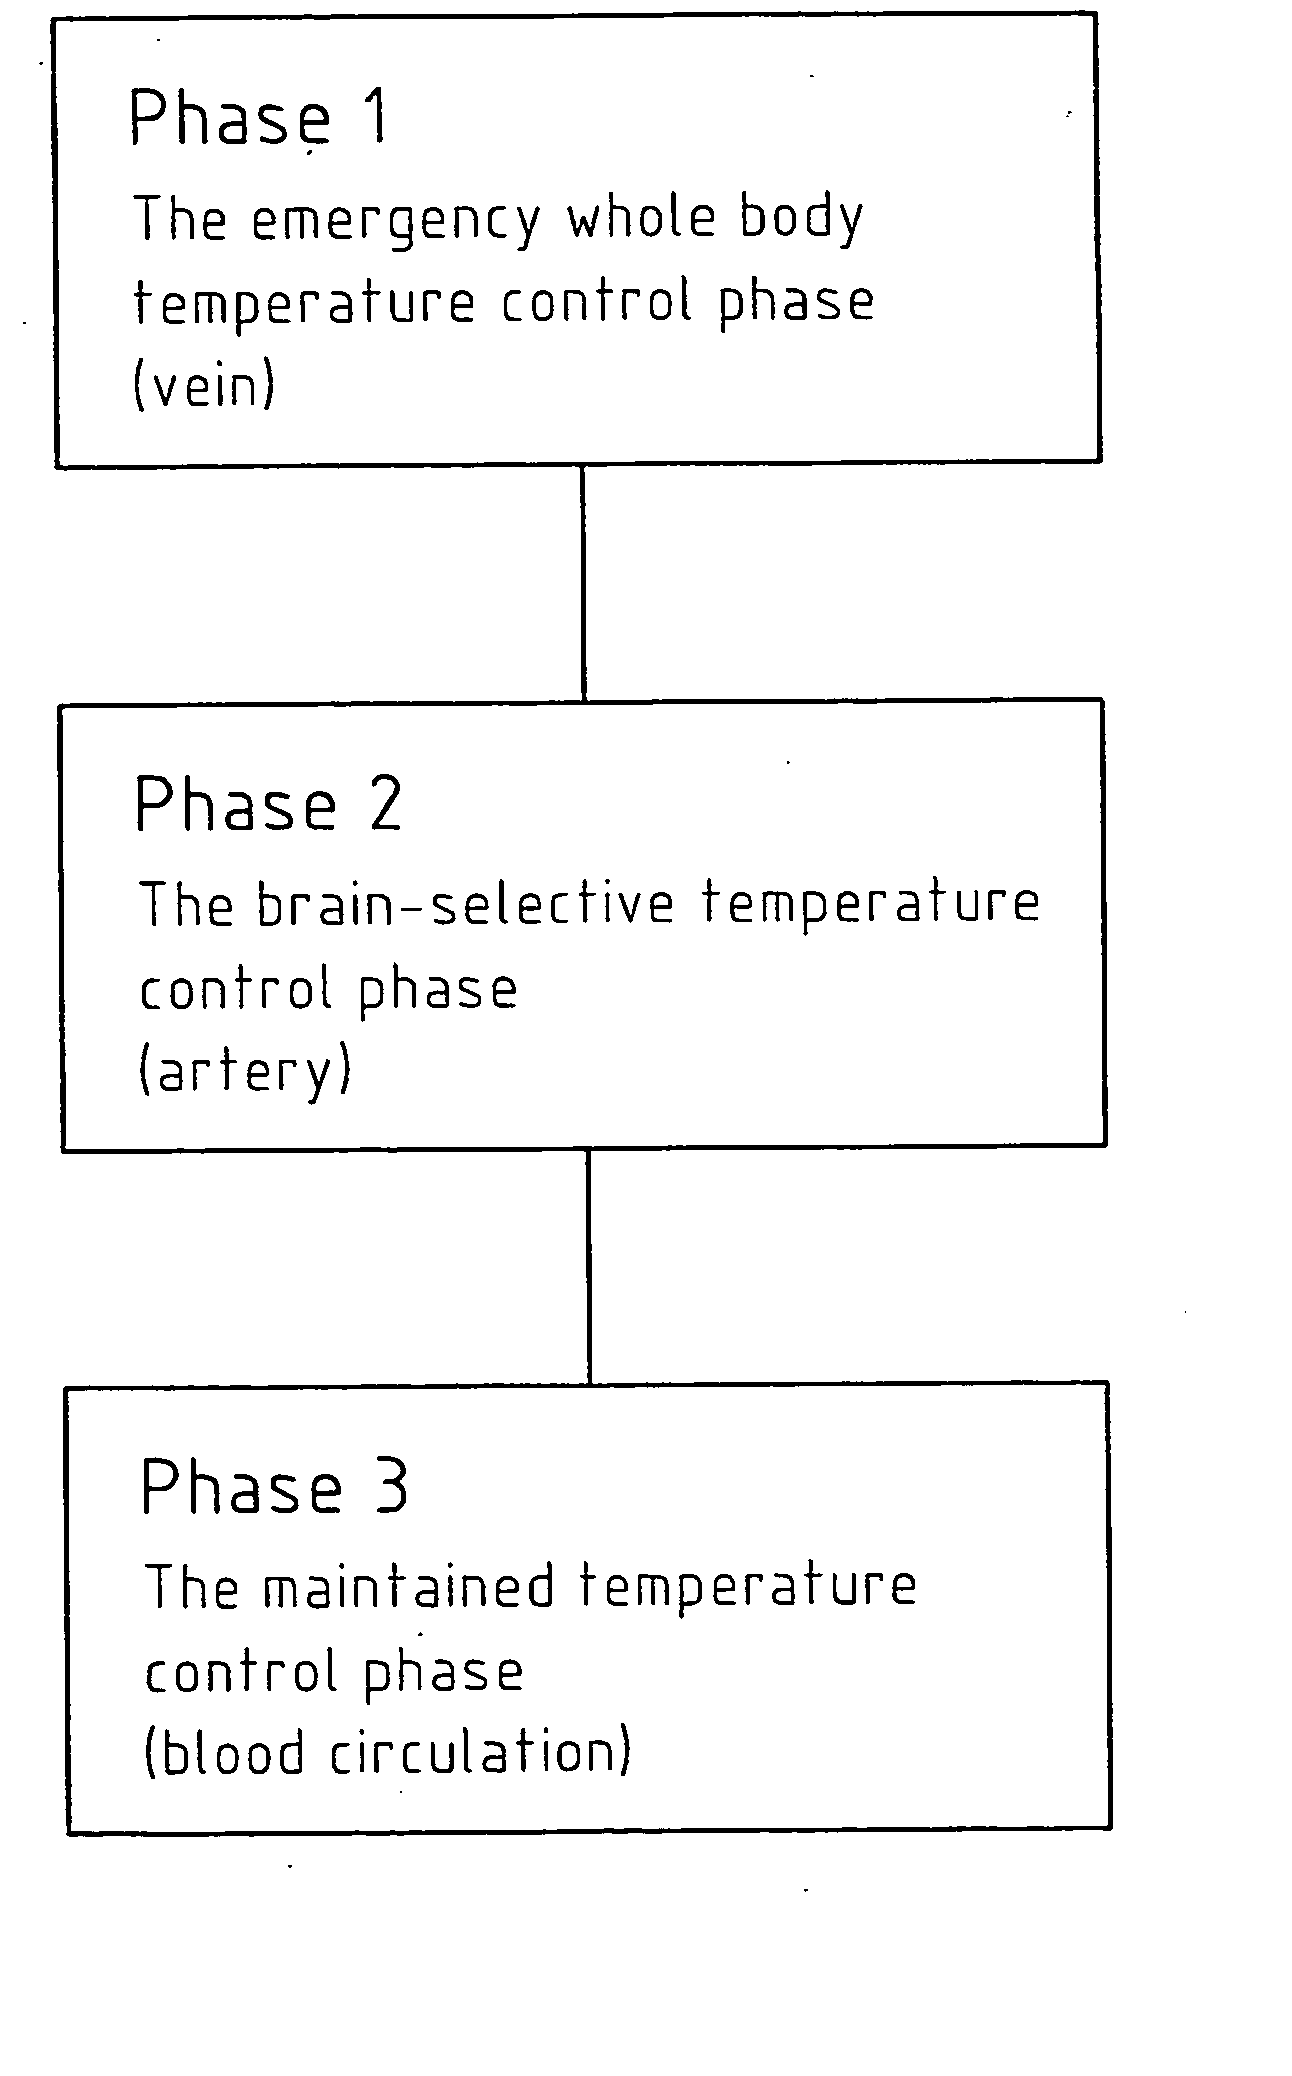 Cerebral temperature control